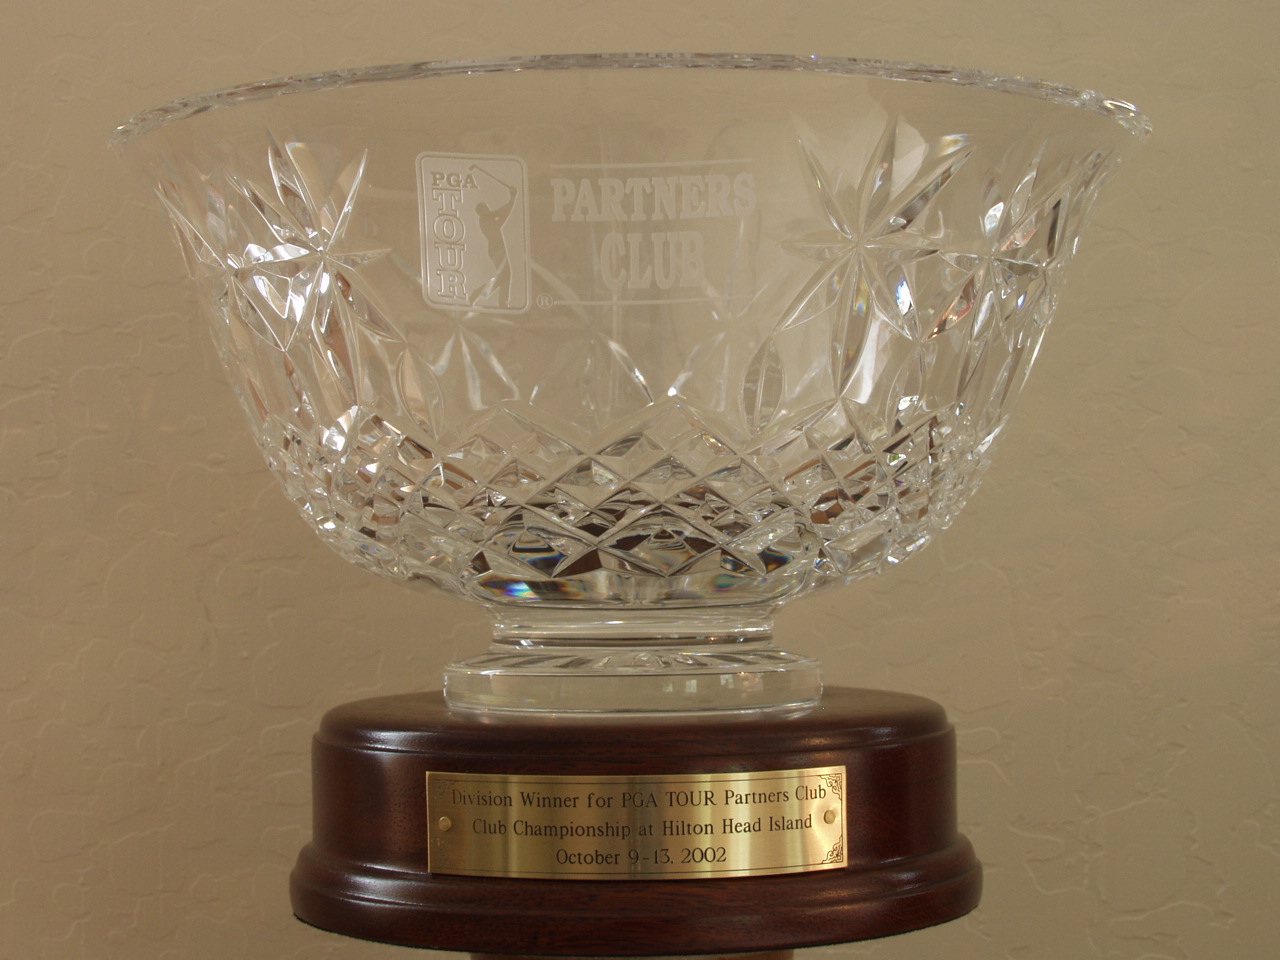 PGA Tour Partners Club Championship Trophy